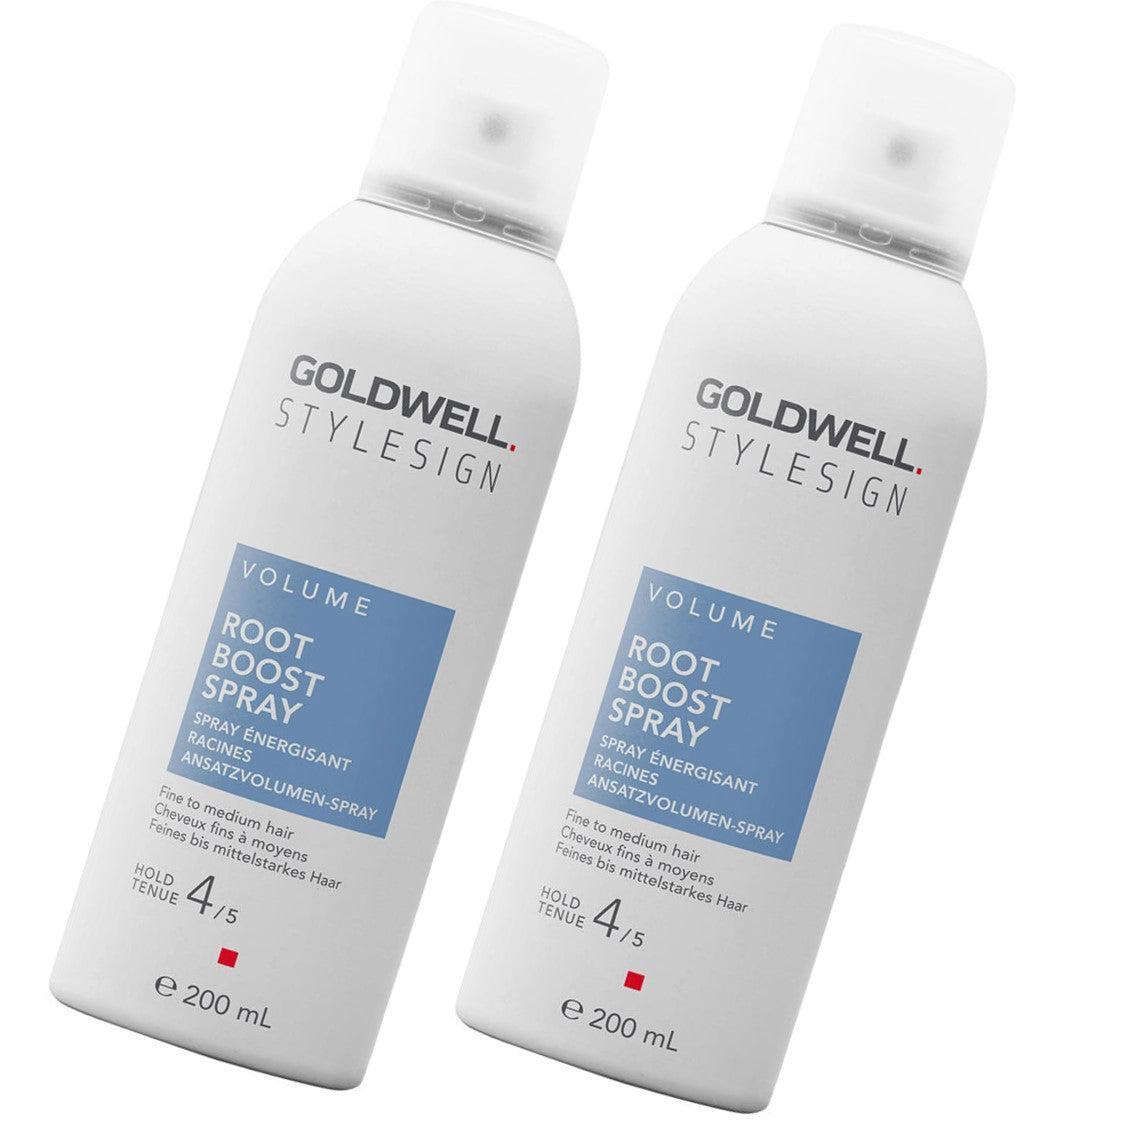 Goldwell StyleSign Volume Root Boost Spray 200 ml x 2